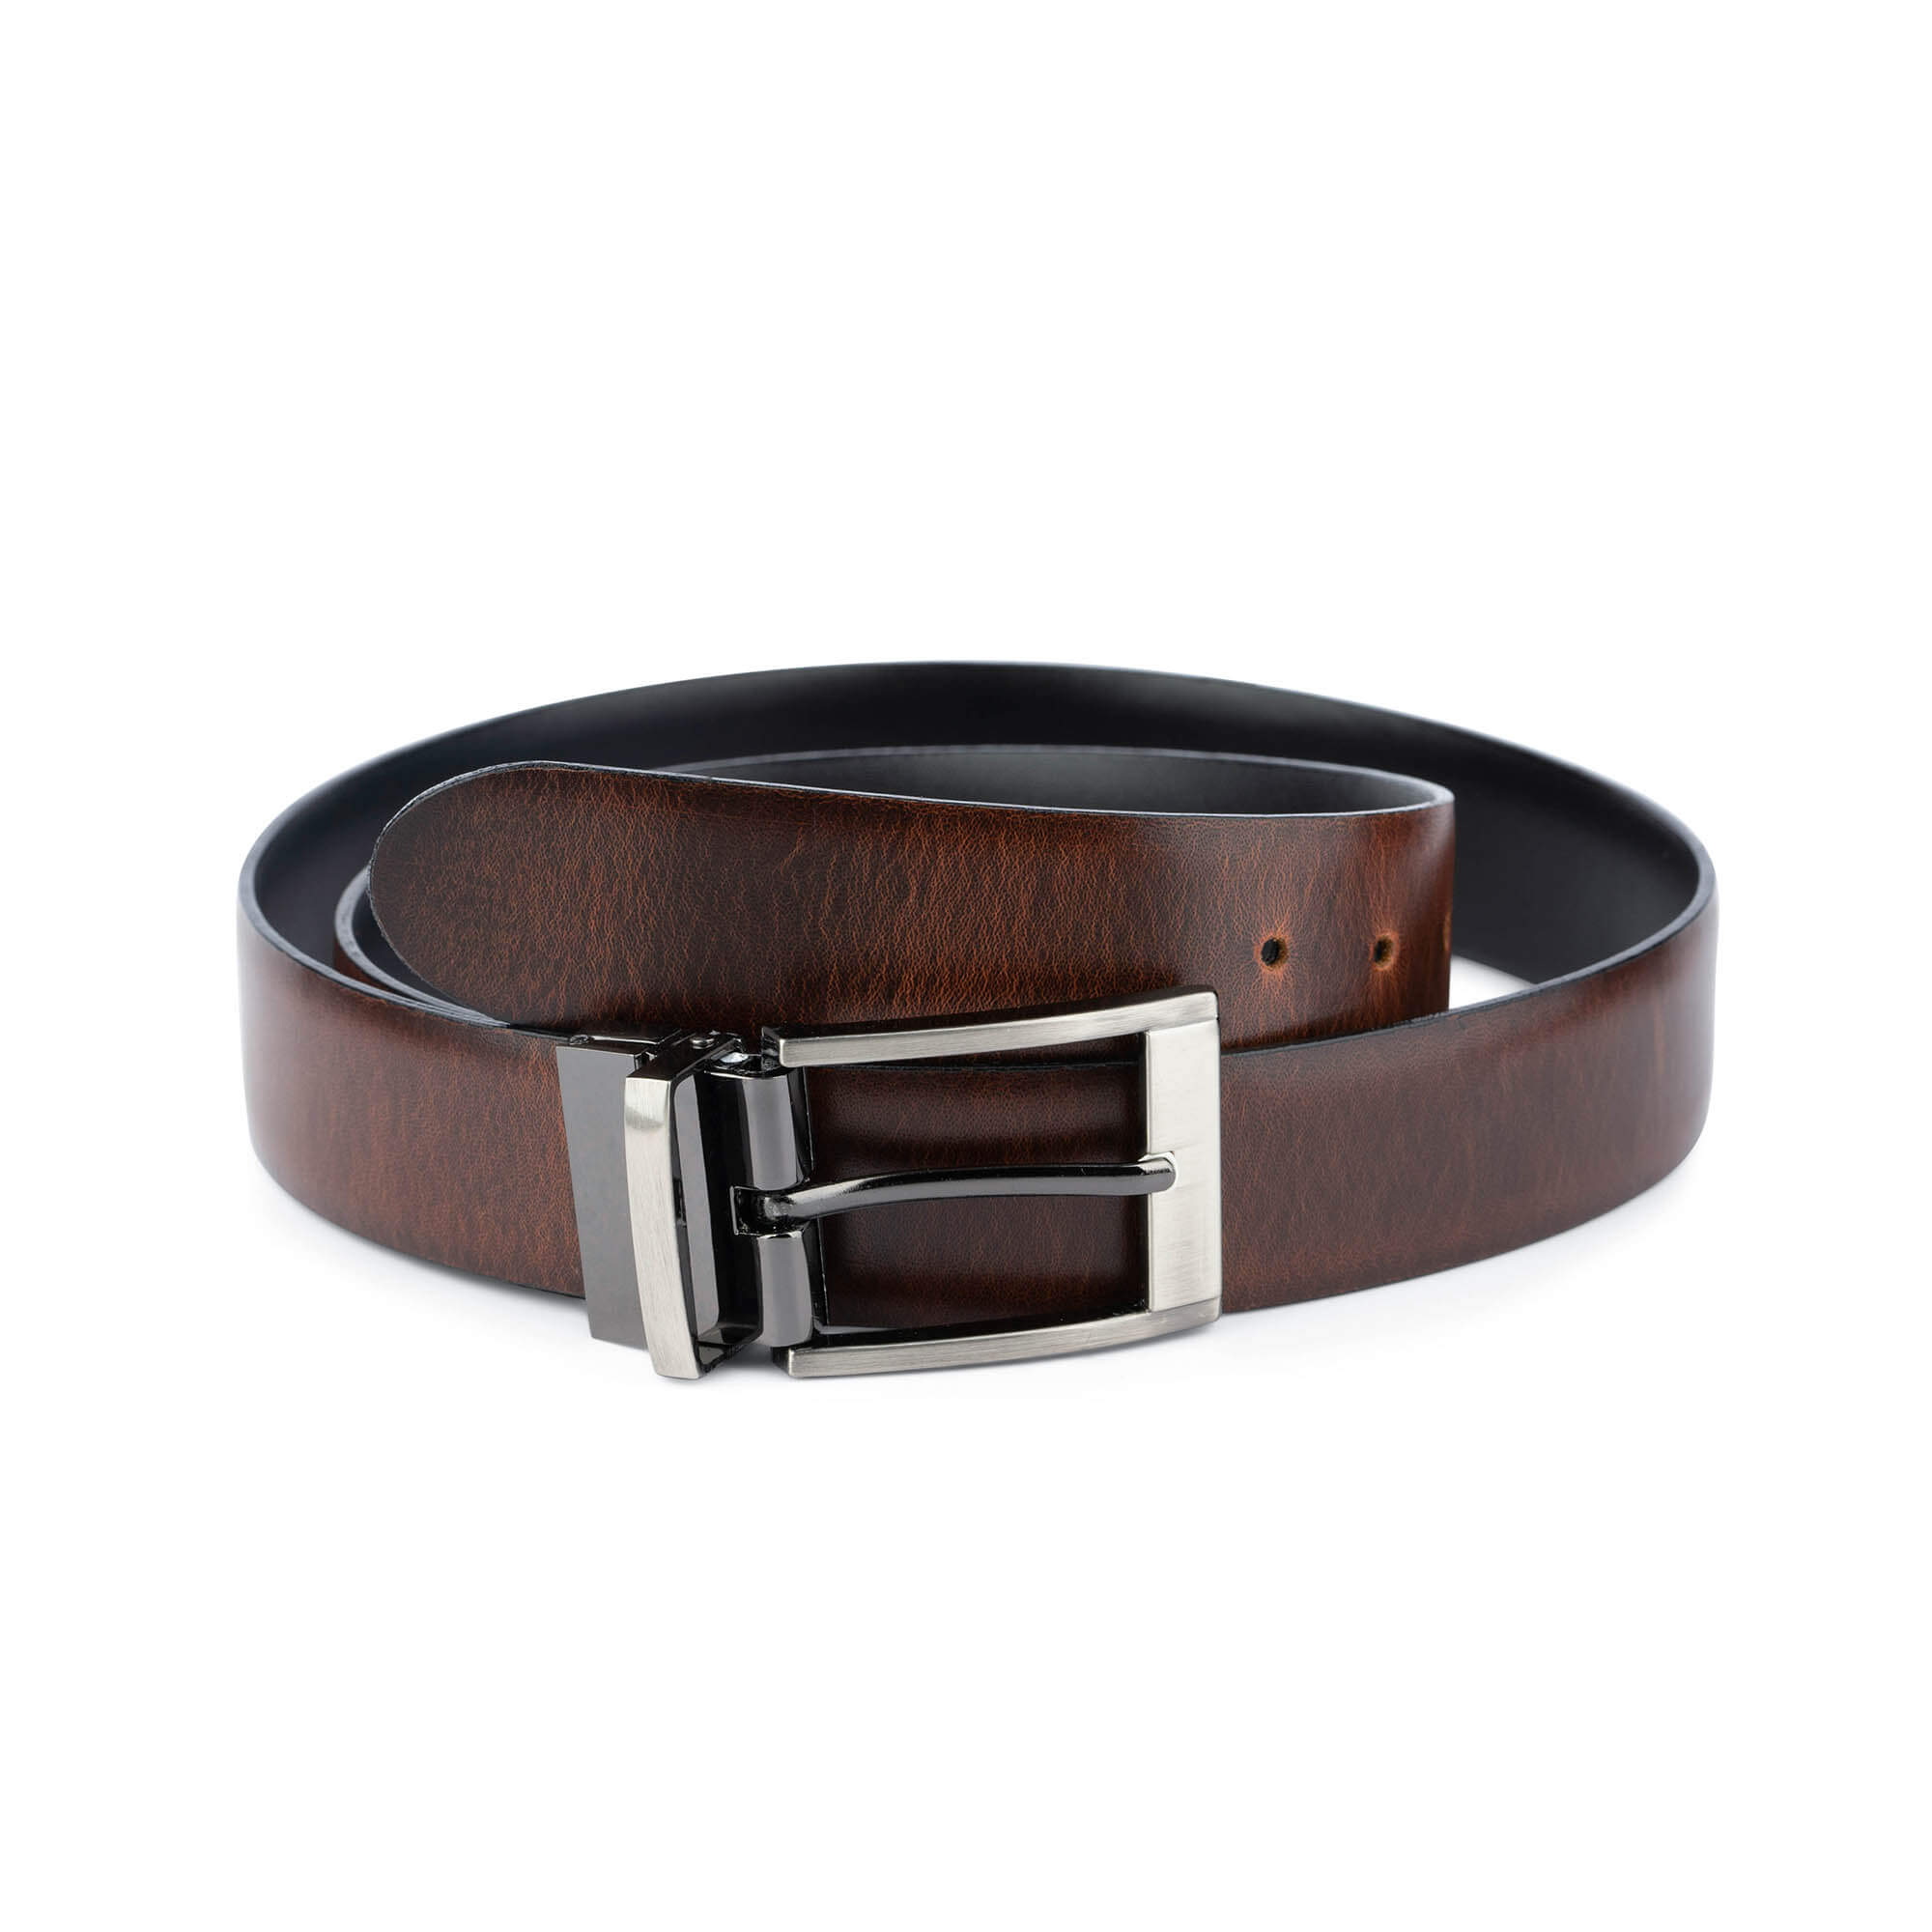 Buy Men's Leather Reversible Belt For Suit | LeatherBeltsOnline.com